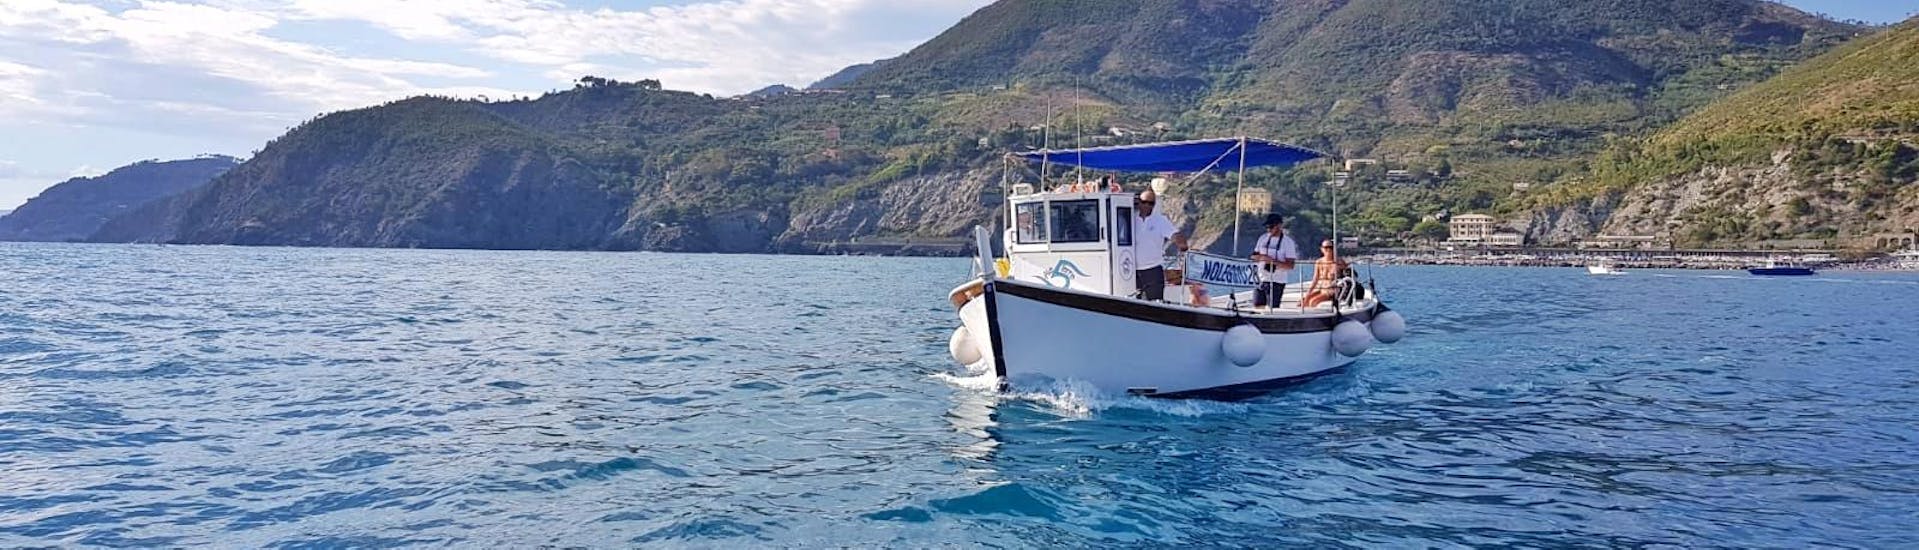 View of Ale 5 Terre's boat in Cinque Terre.